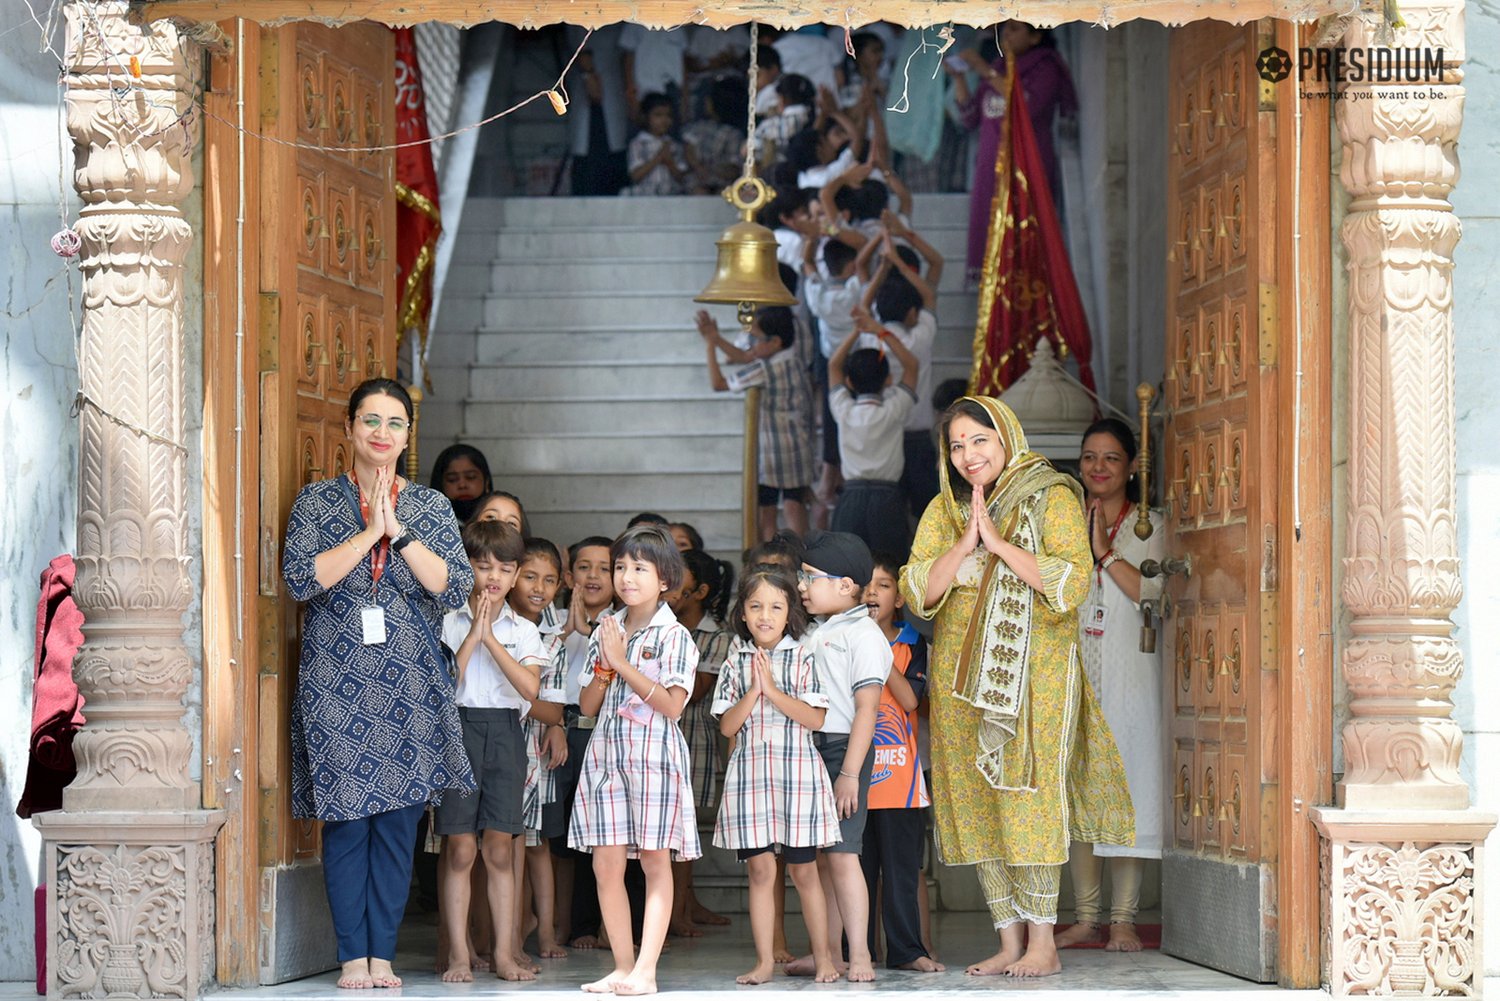 Presidium Rajnagar, PRESIDIANS EMBODY LORD KRISHNA’S TEACHINGS WITH ISKON VISIT